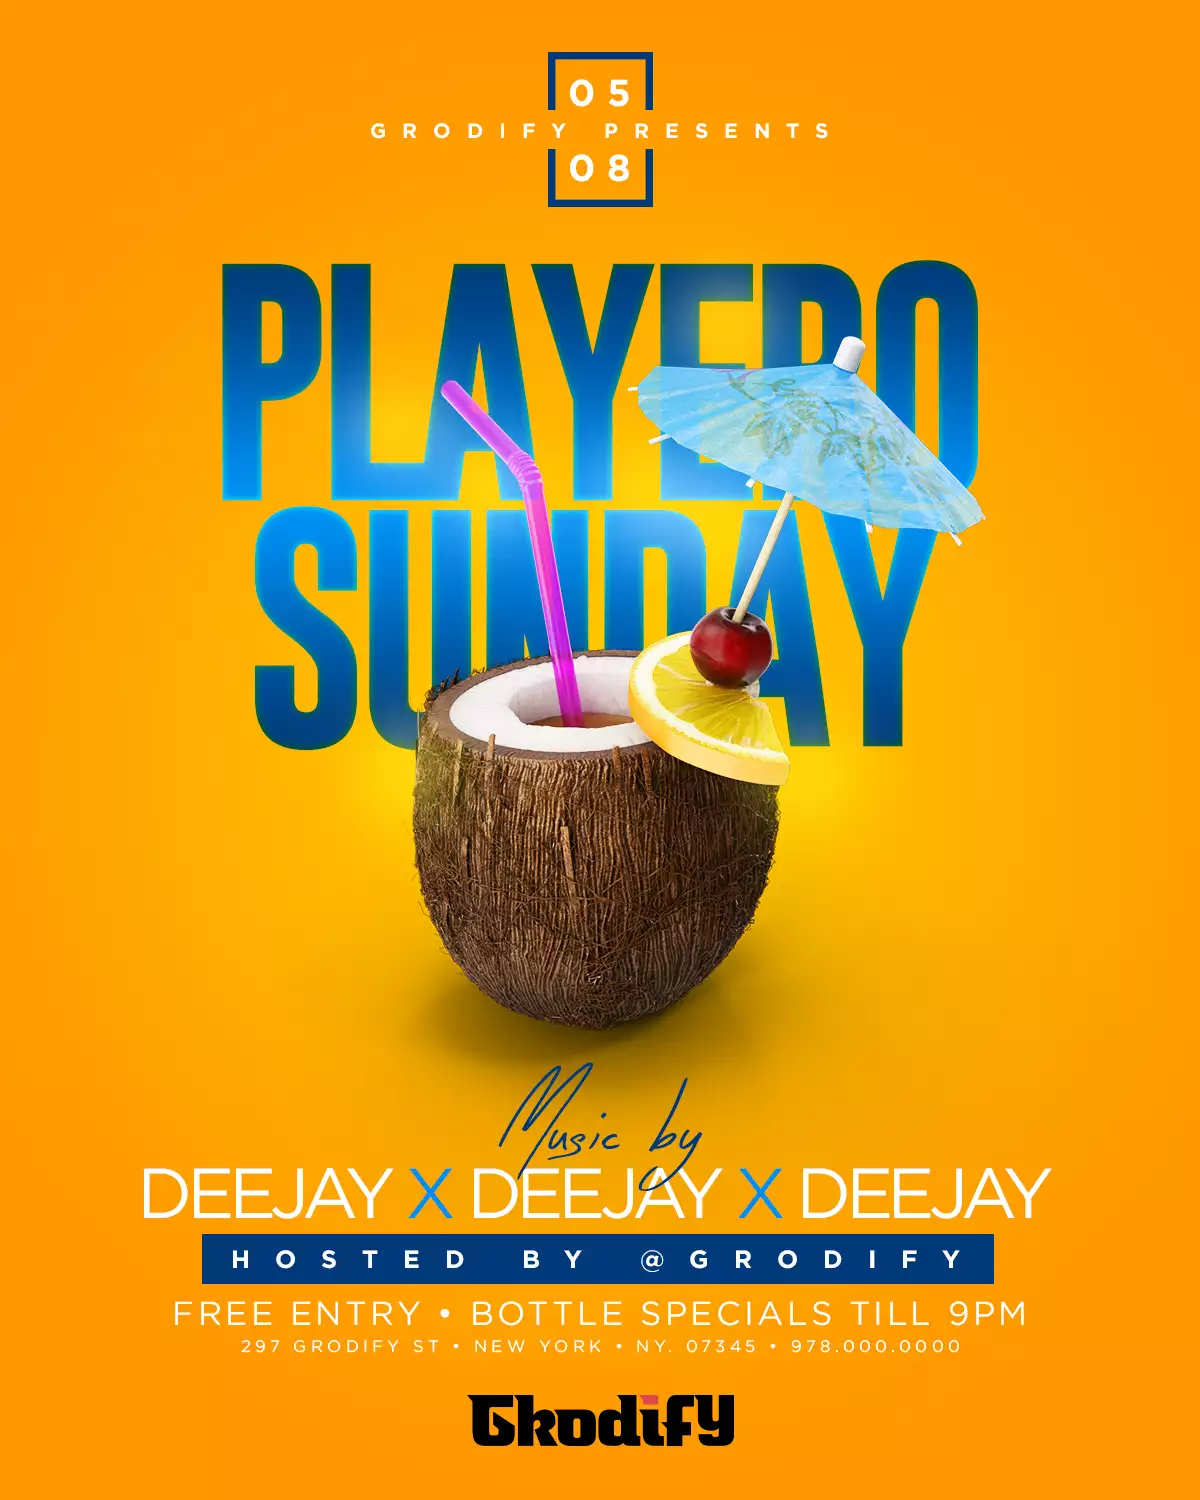 Playero Sunday